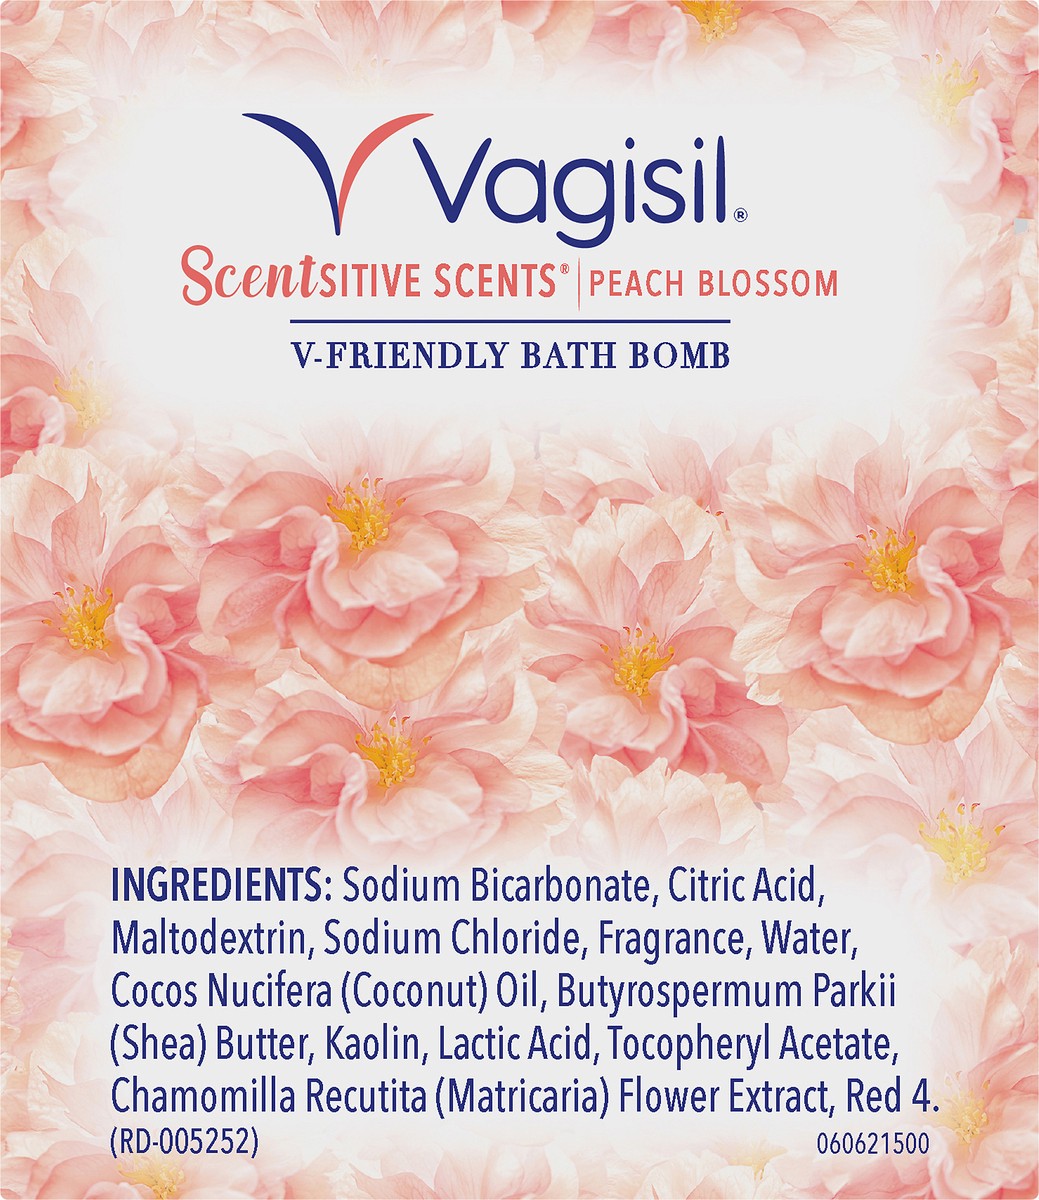 slide 4 of 7, Vagisil Scentsitive Scents V-Friendly Bath Bomb, pH-Friendly for Sensitive Vaginal Skin, Peach Blossom, 4 oz